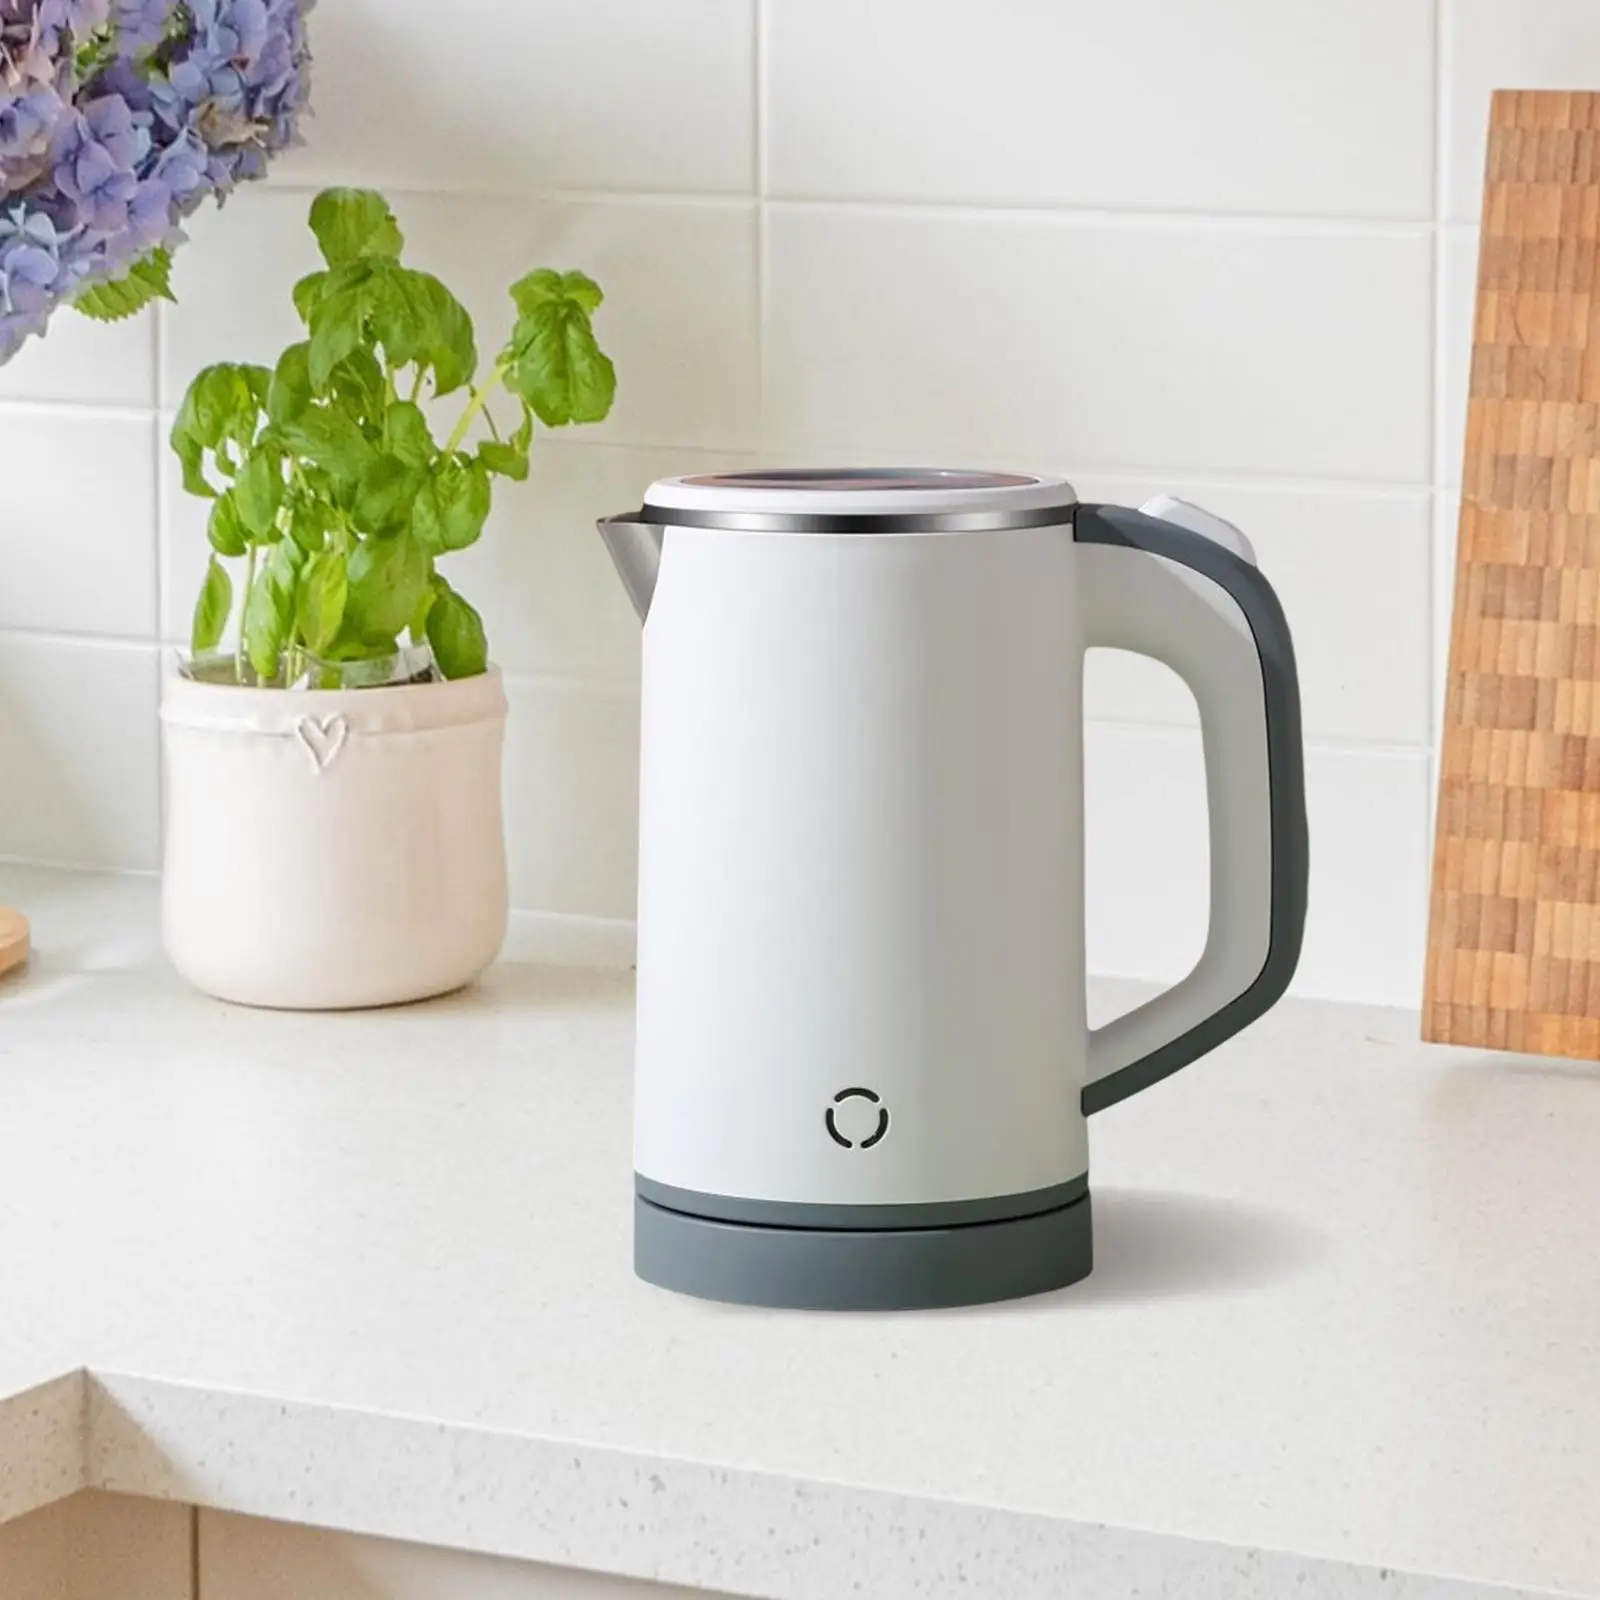 Electric Travel Kettle water Heating Tea Kettle Automatic Shut Off Dry Protection Portable Tea Pot EU Plug